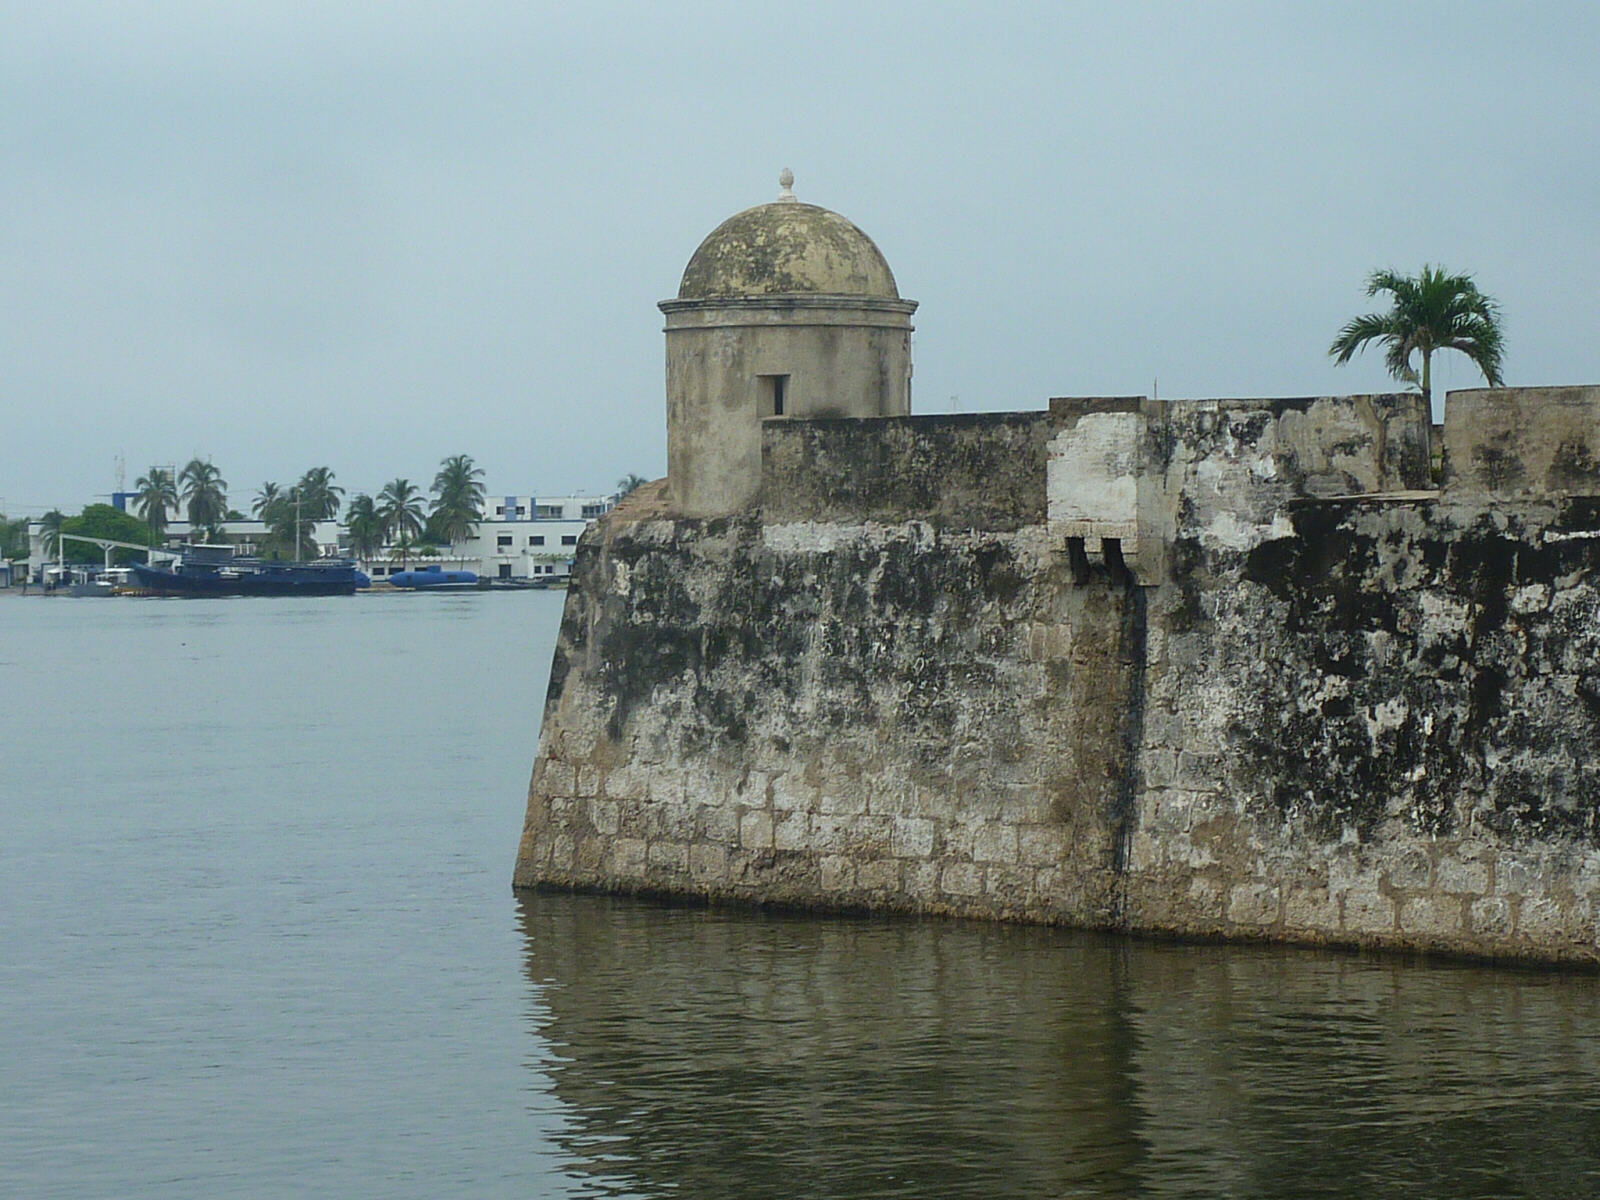 Baluarte del Reducto in the city walls of Cartagena